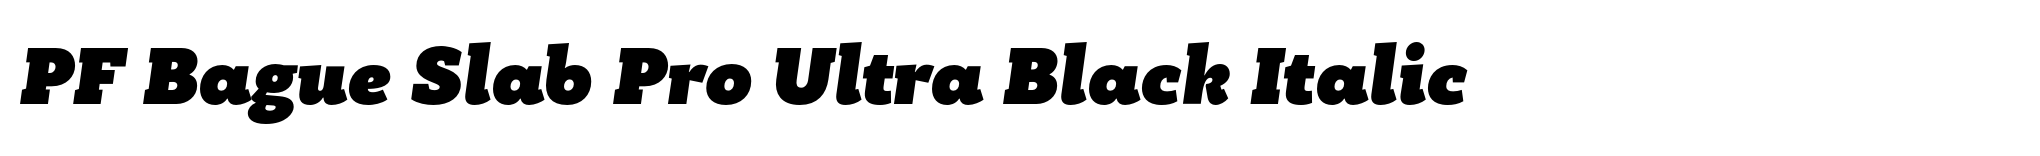 PF Bague Slab Pro Ultra Black Italic image